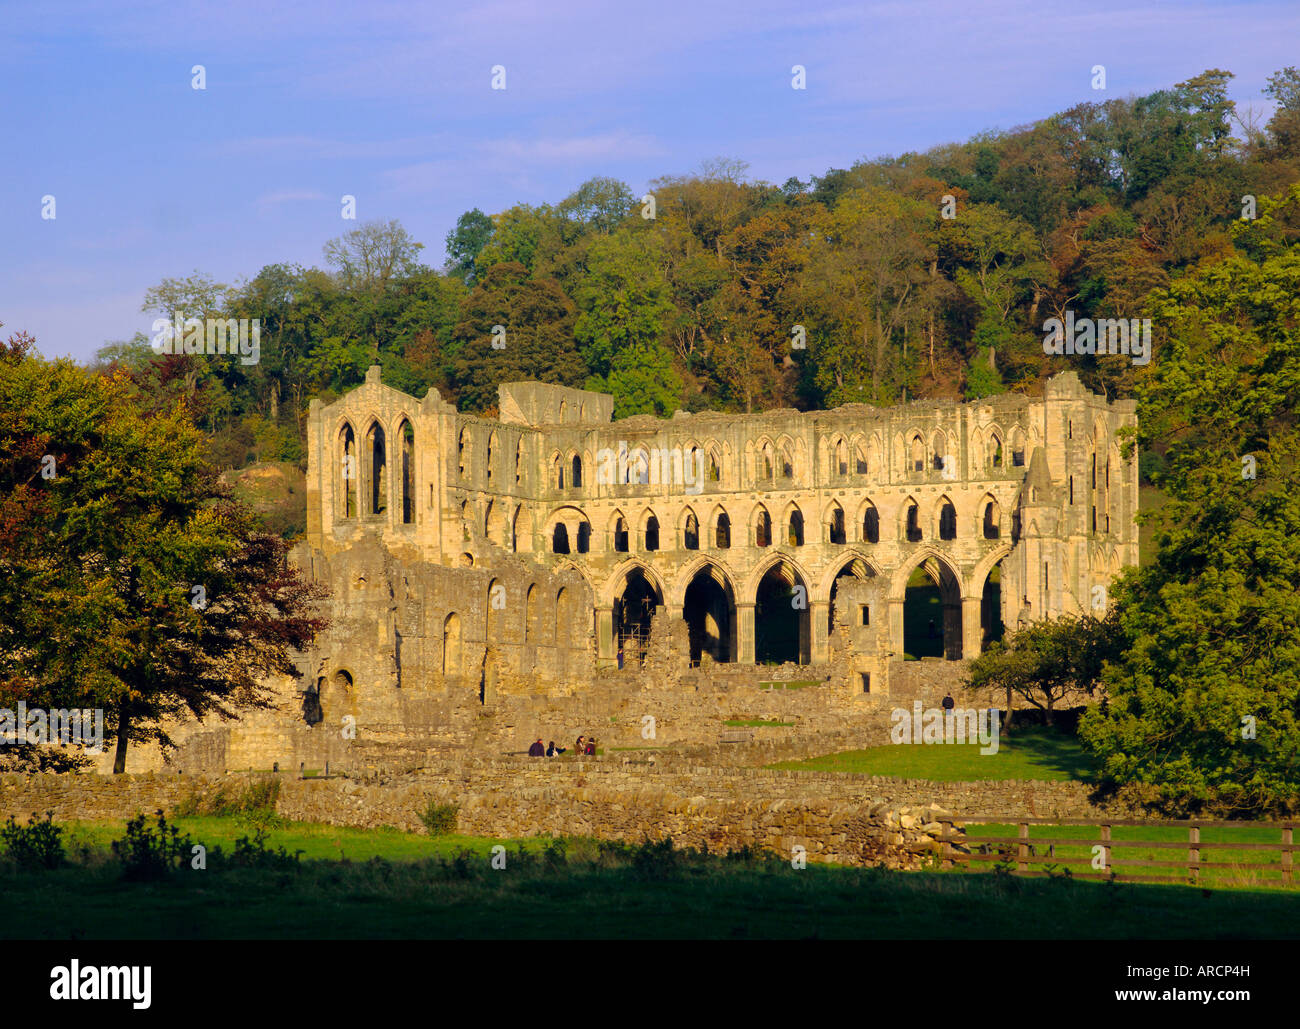 Rievaulx Abbey, old Cistercian abbey, Ryedale, North Yorkshire, England, UK, Europe Stock Photo